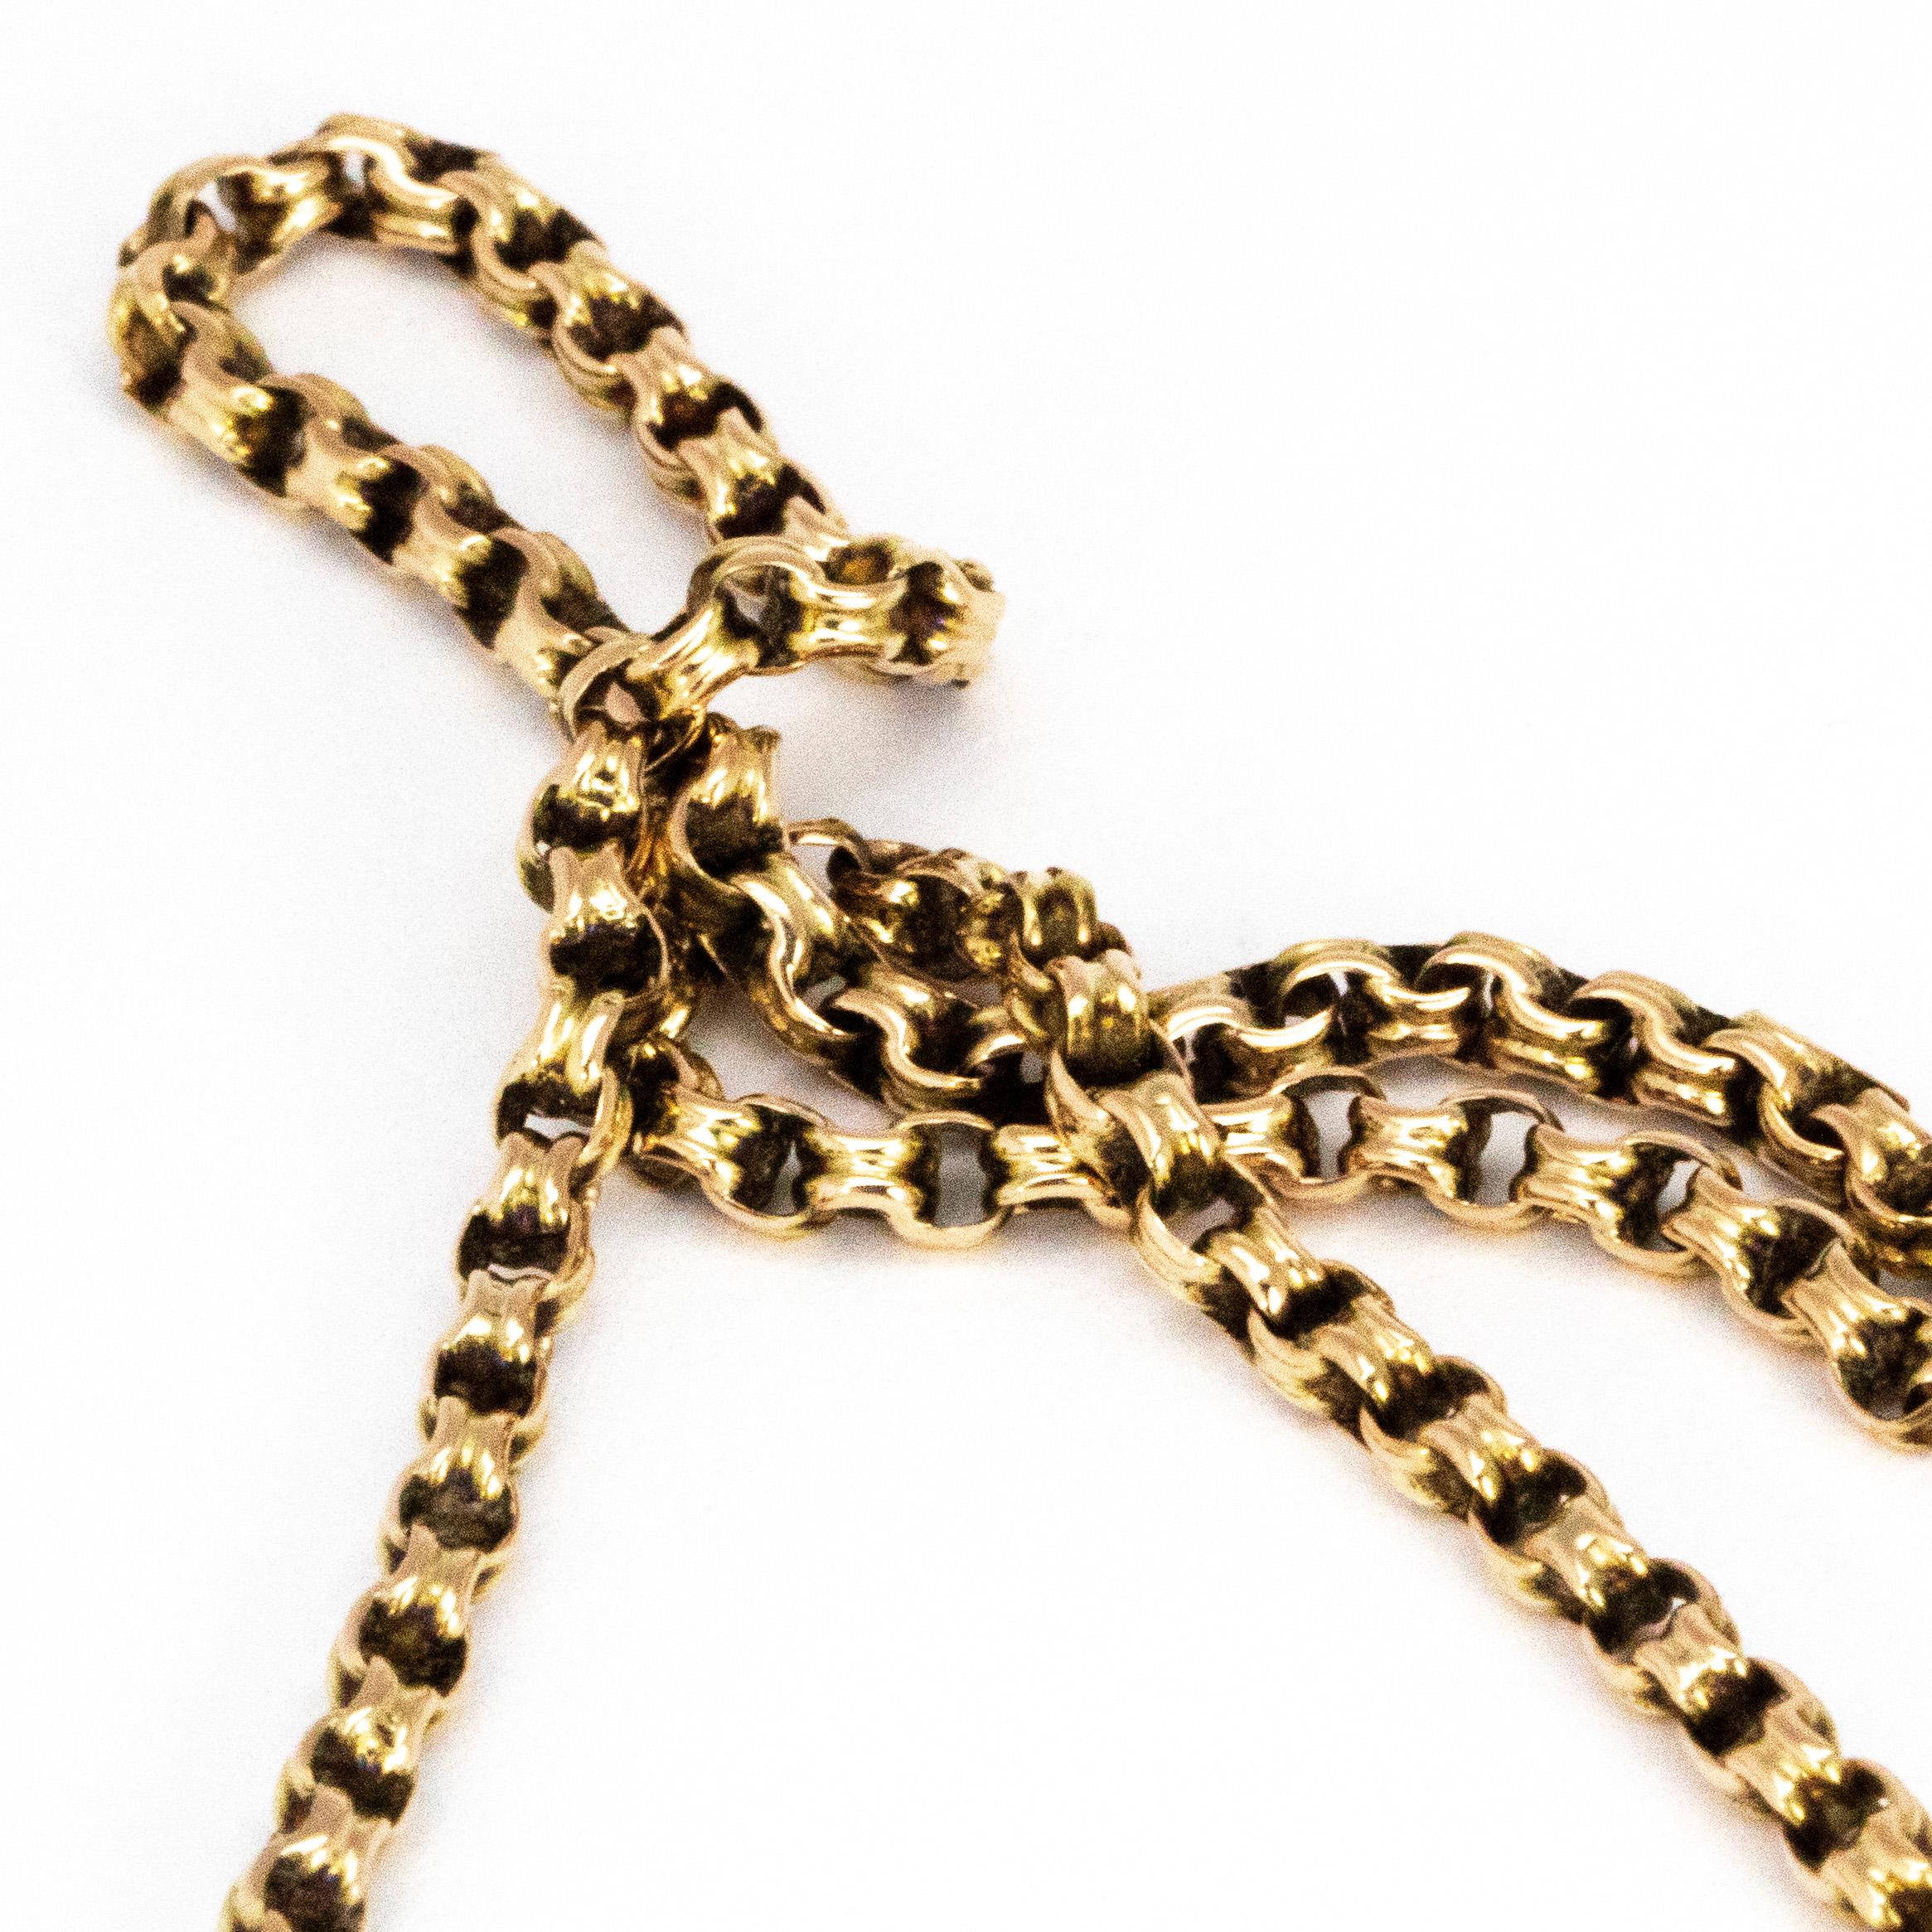 9 carat gold cross necklace